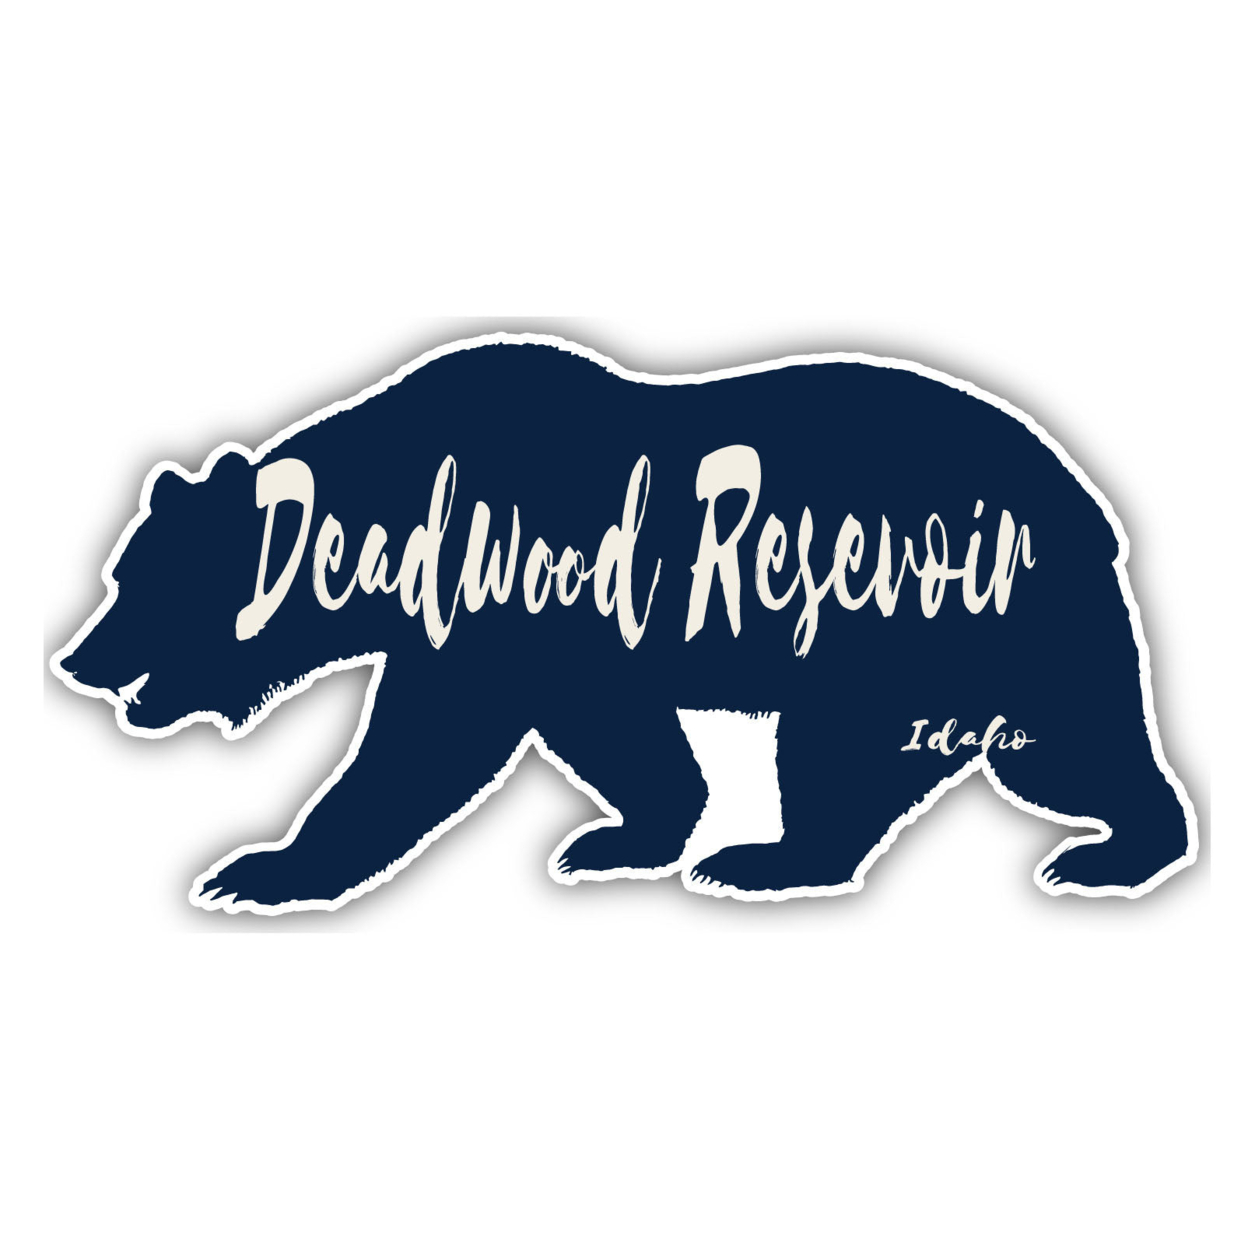 Deadwood Resevoir Idaho Souvenir Decorative Stickers (Choose Theme And Size) - Single Unit, 6-Inch, Bear